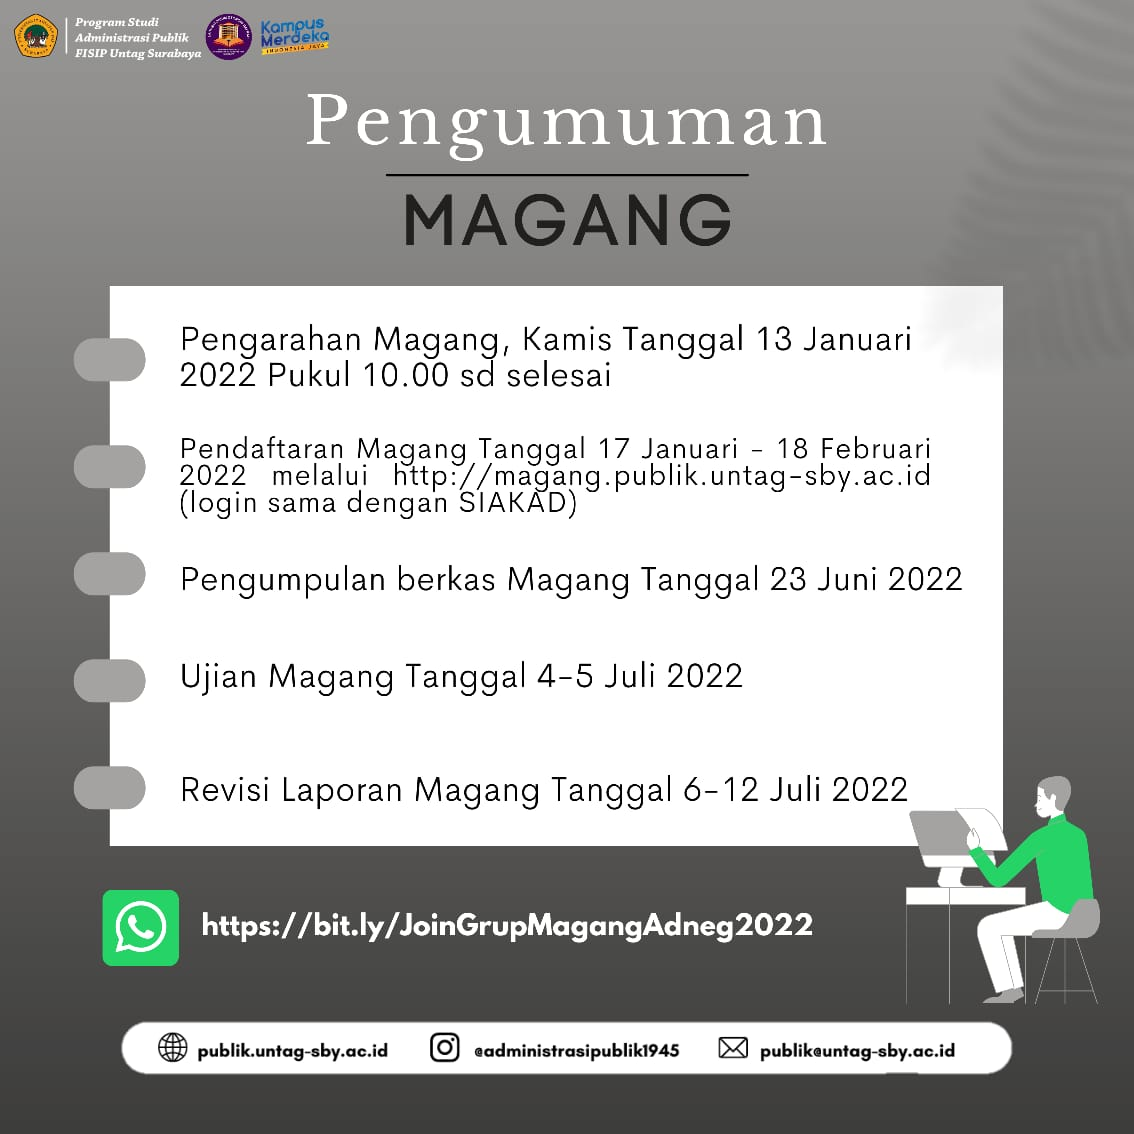 PENGUMUMAN MAGANG SEMESTER GENAP 2021/2022